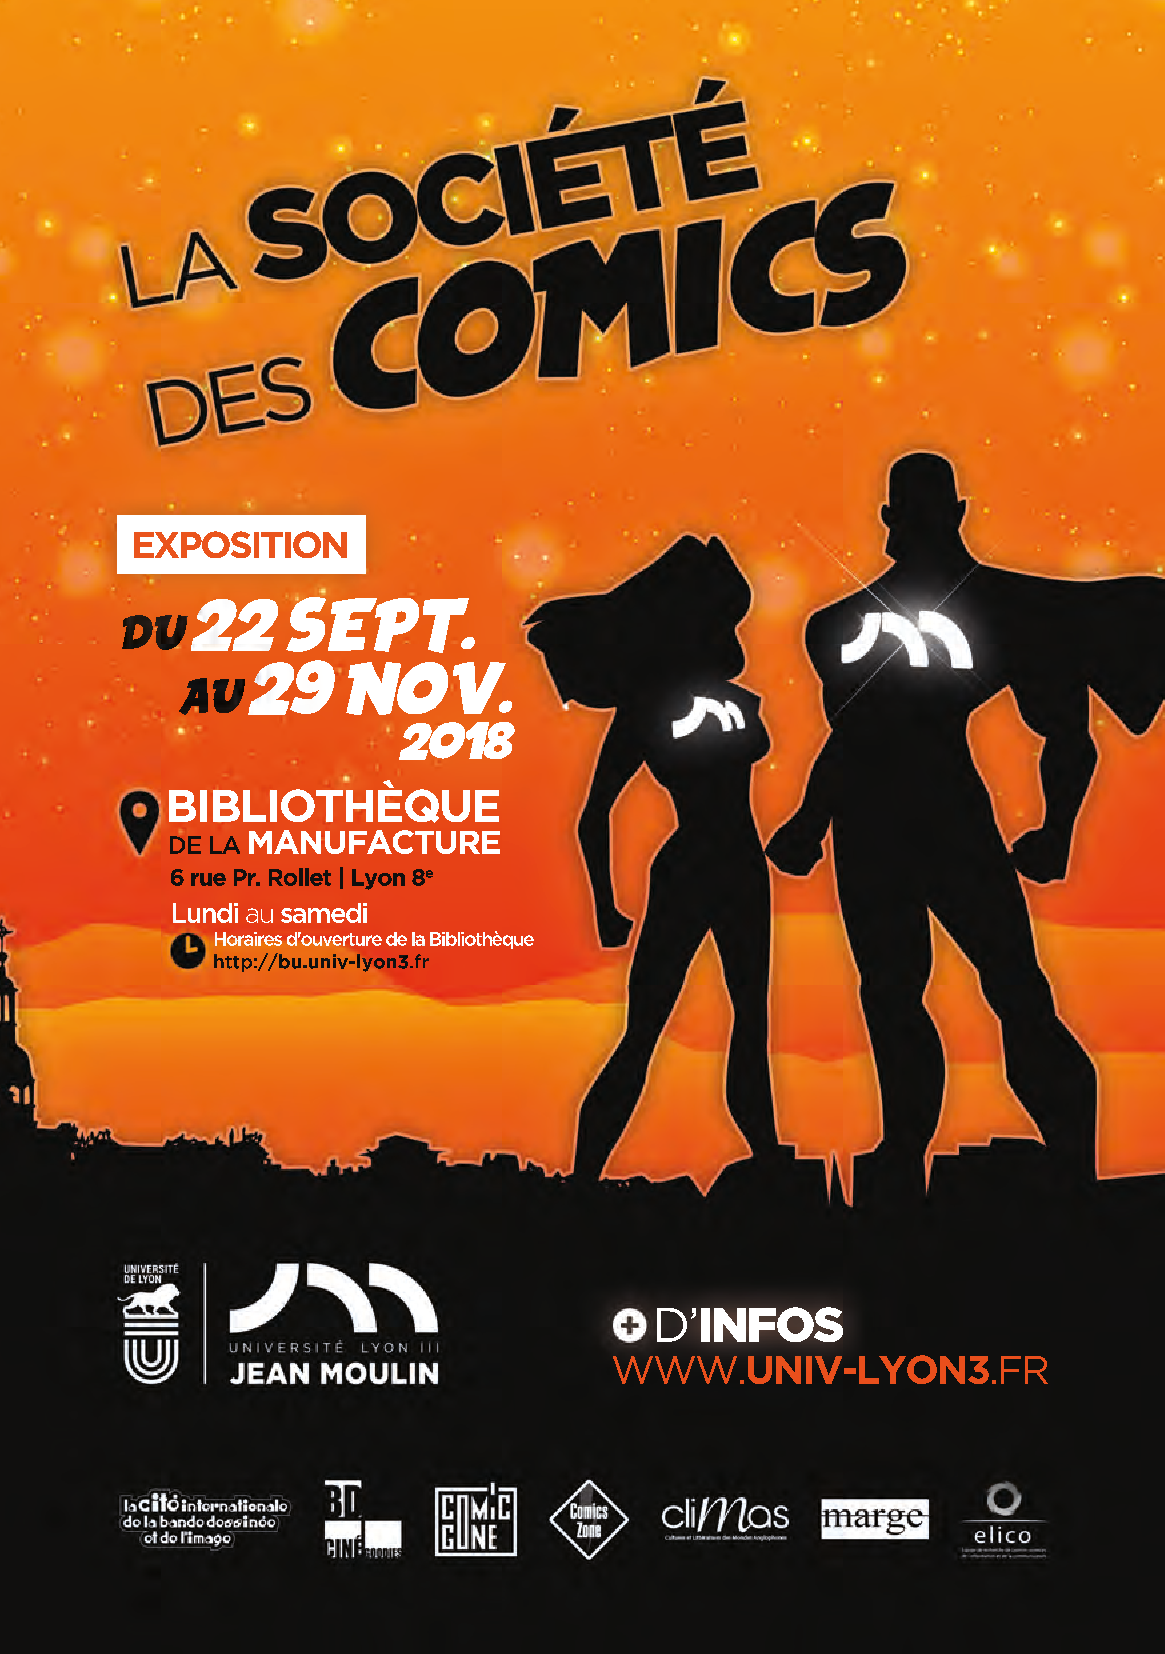 Concours Cosplay Marvel vs DC (5 octobre, BU Lyon 3)